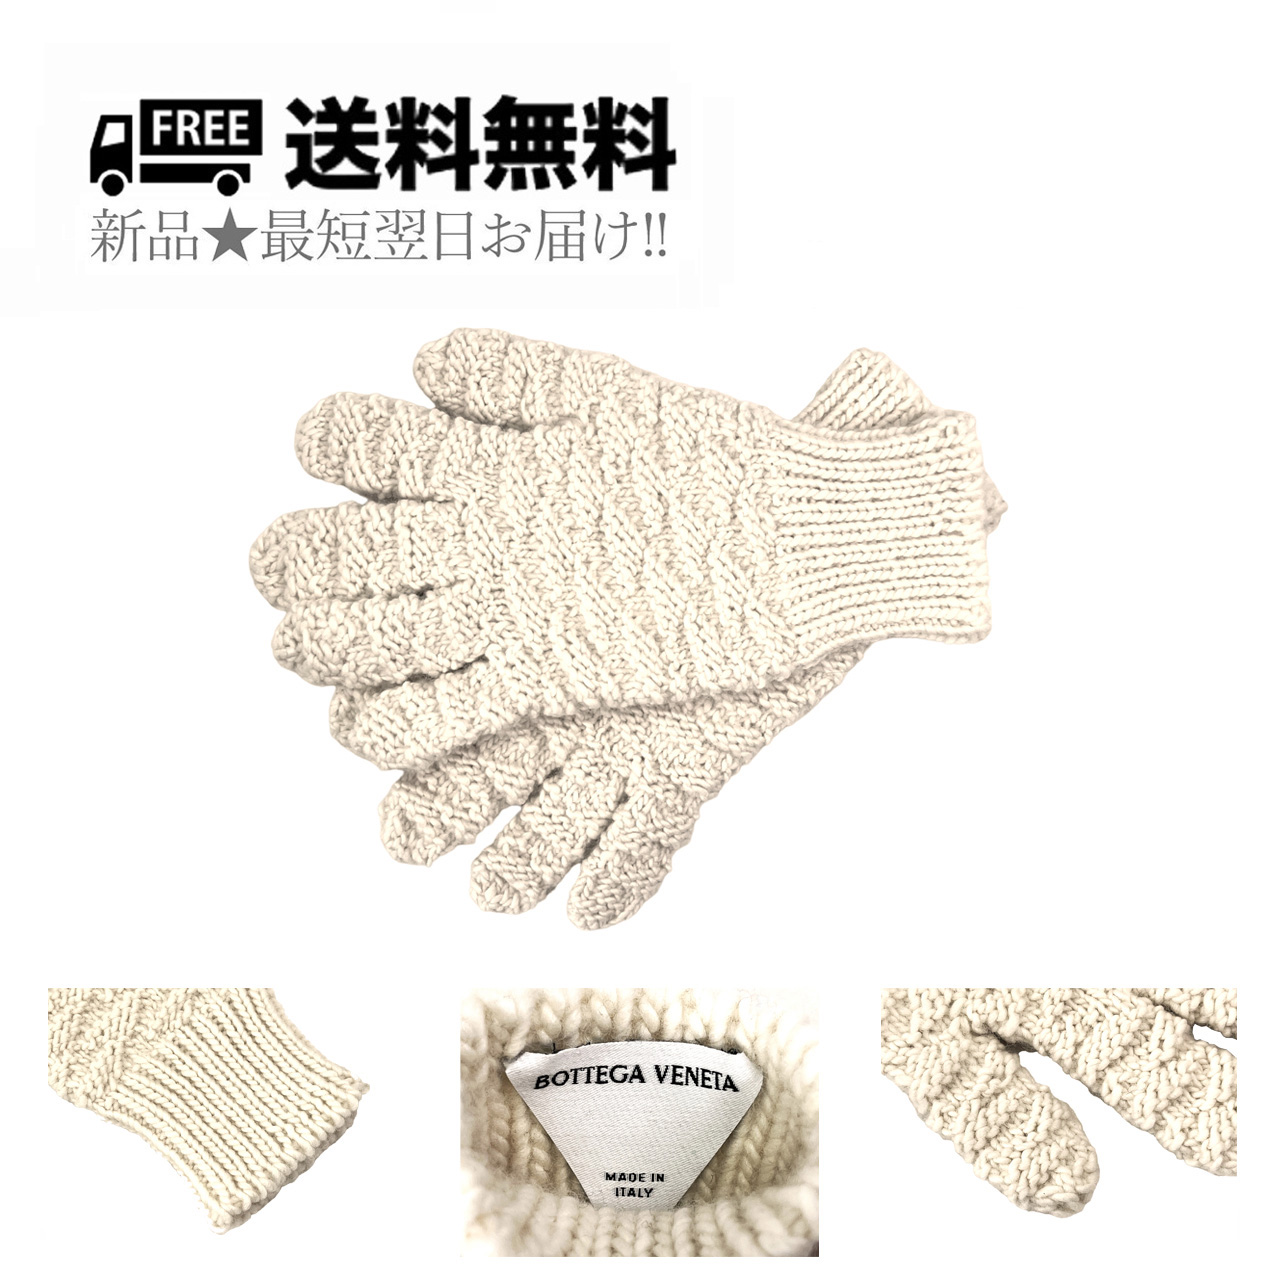 BOTTEGA VENETA ボッテガ ヴェネタ 手袋 グローブ ユニセックス 羊毛 イタリア製 新品 ★ 9071 オフホワイトのサムネイル